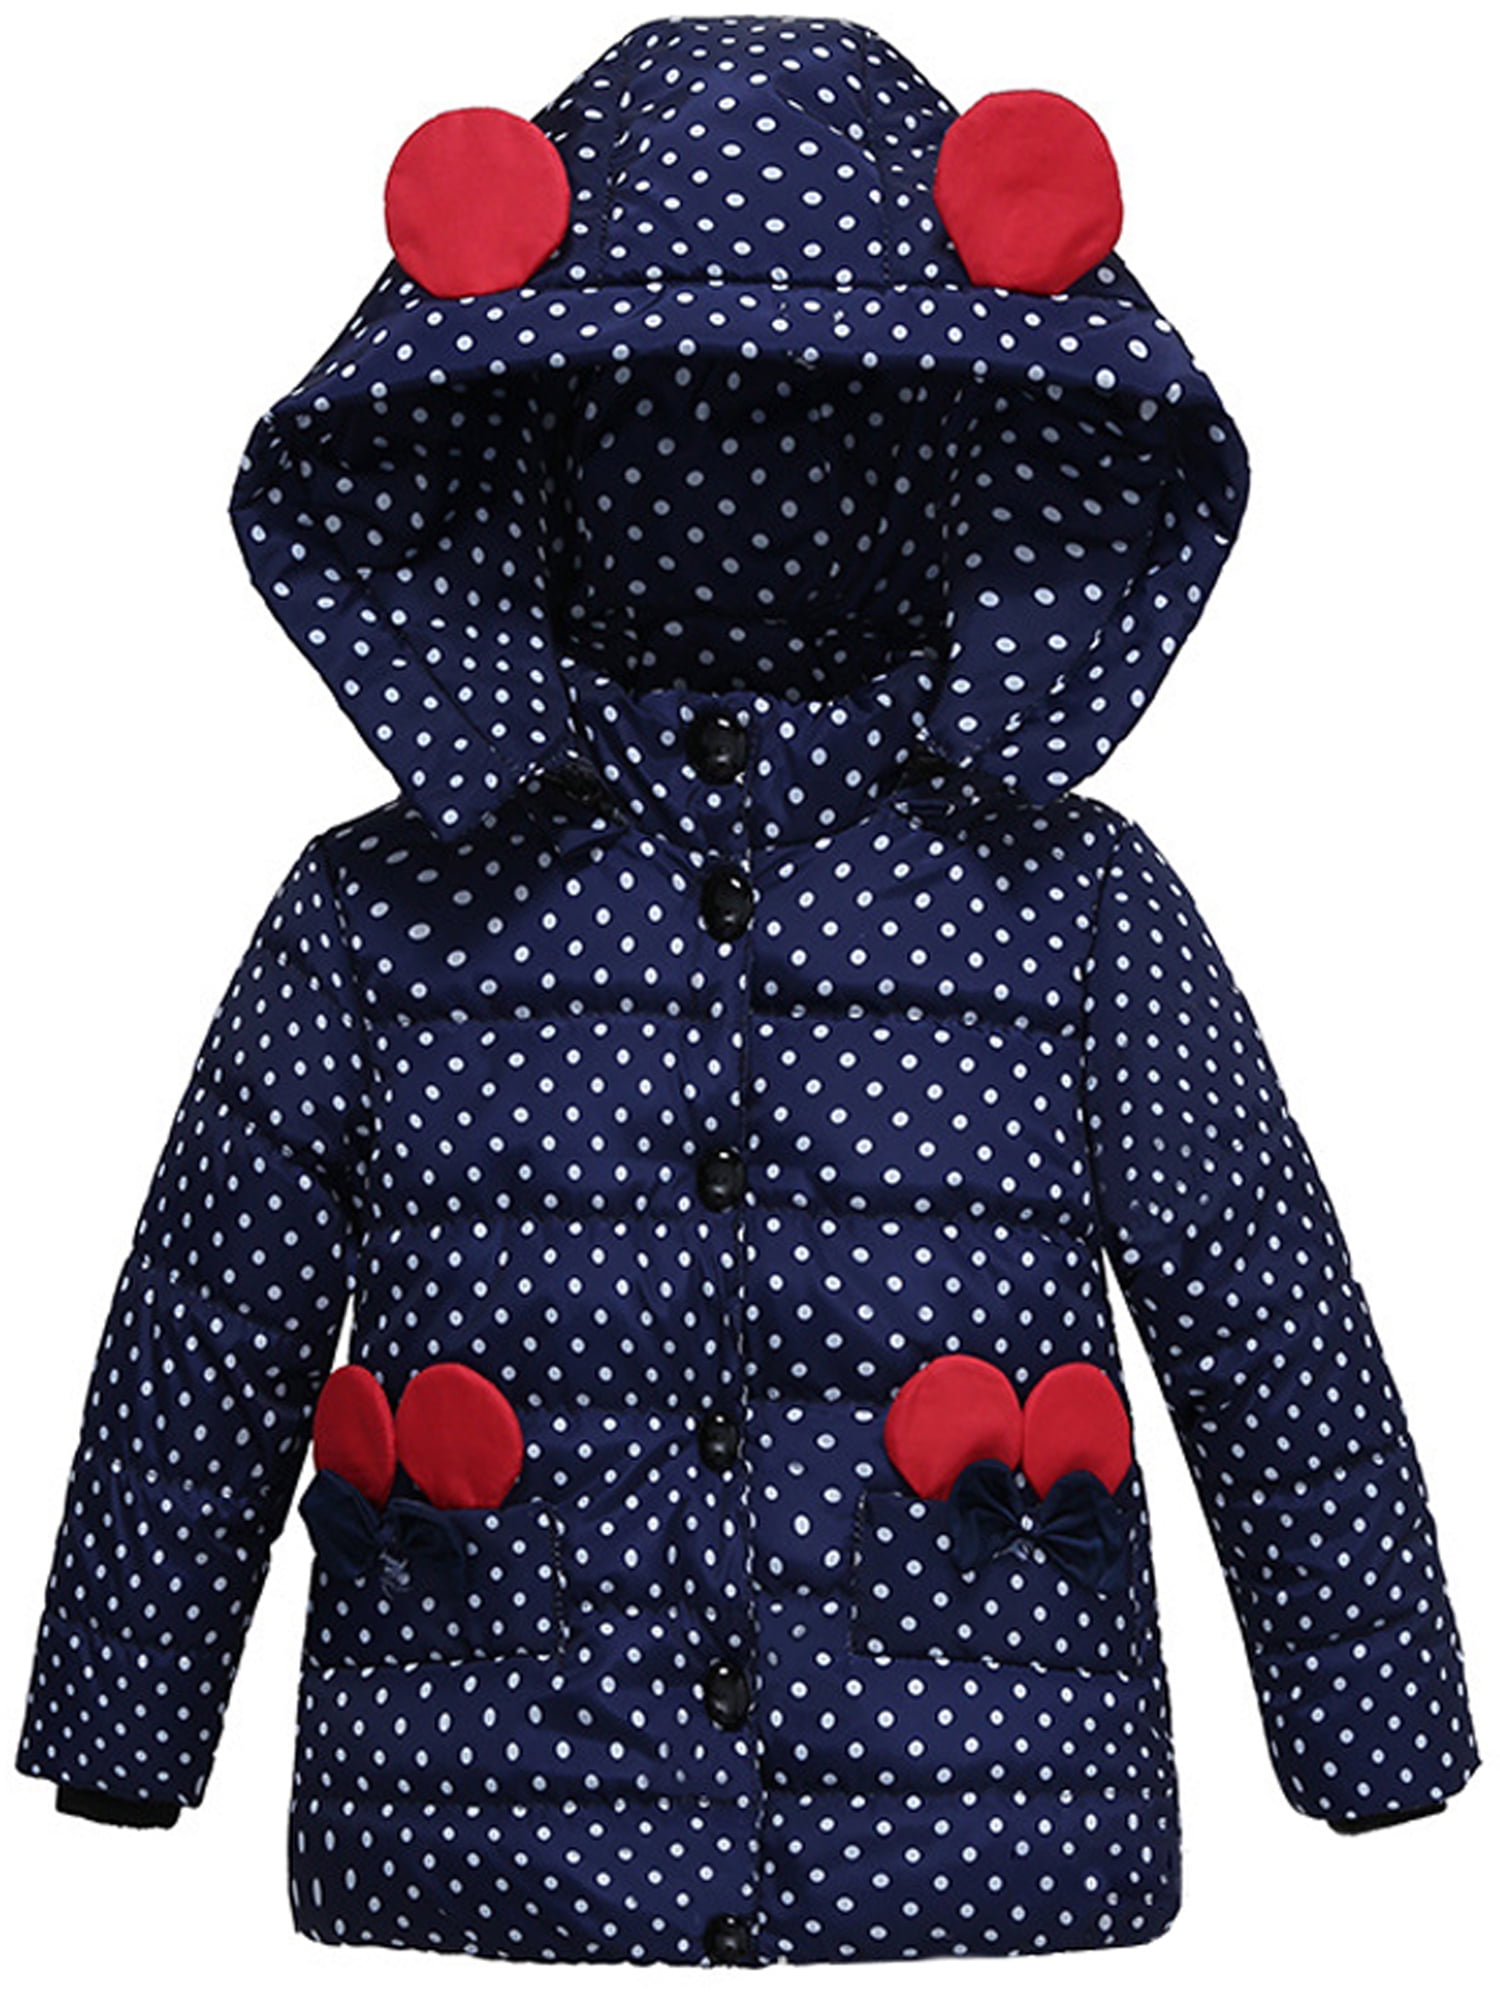 Baby Girl Red Fleece Winter Warm Coat Polka Dot Jacket Cute Rabbit Outerwear with Scarf 